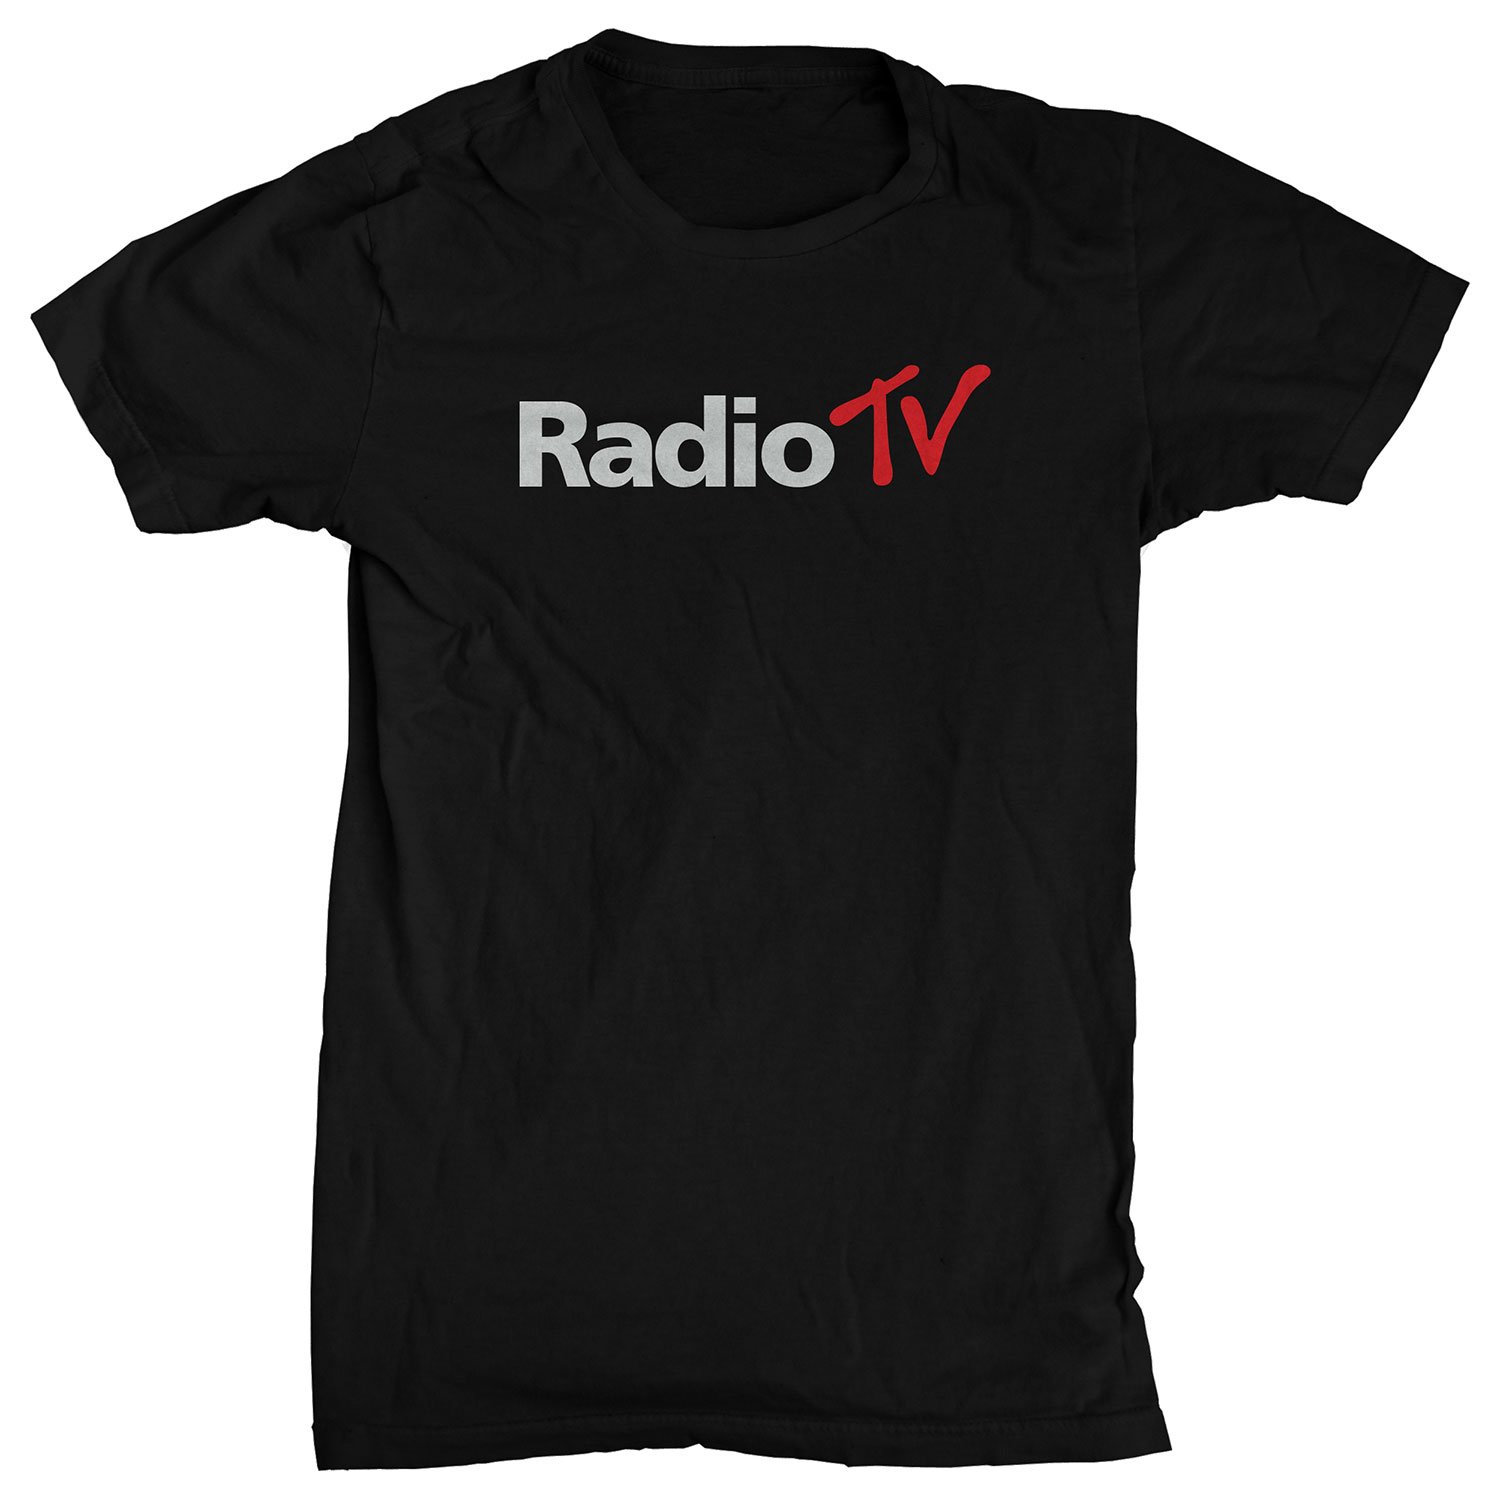 Oh snap, a black RadioTV shirt.